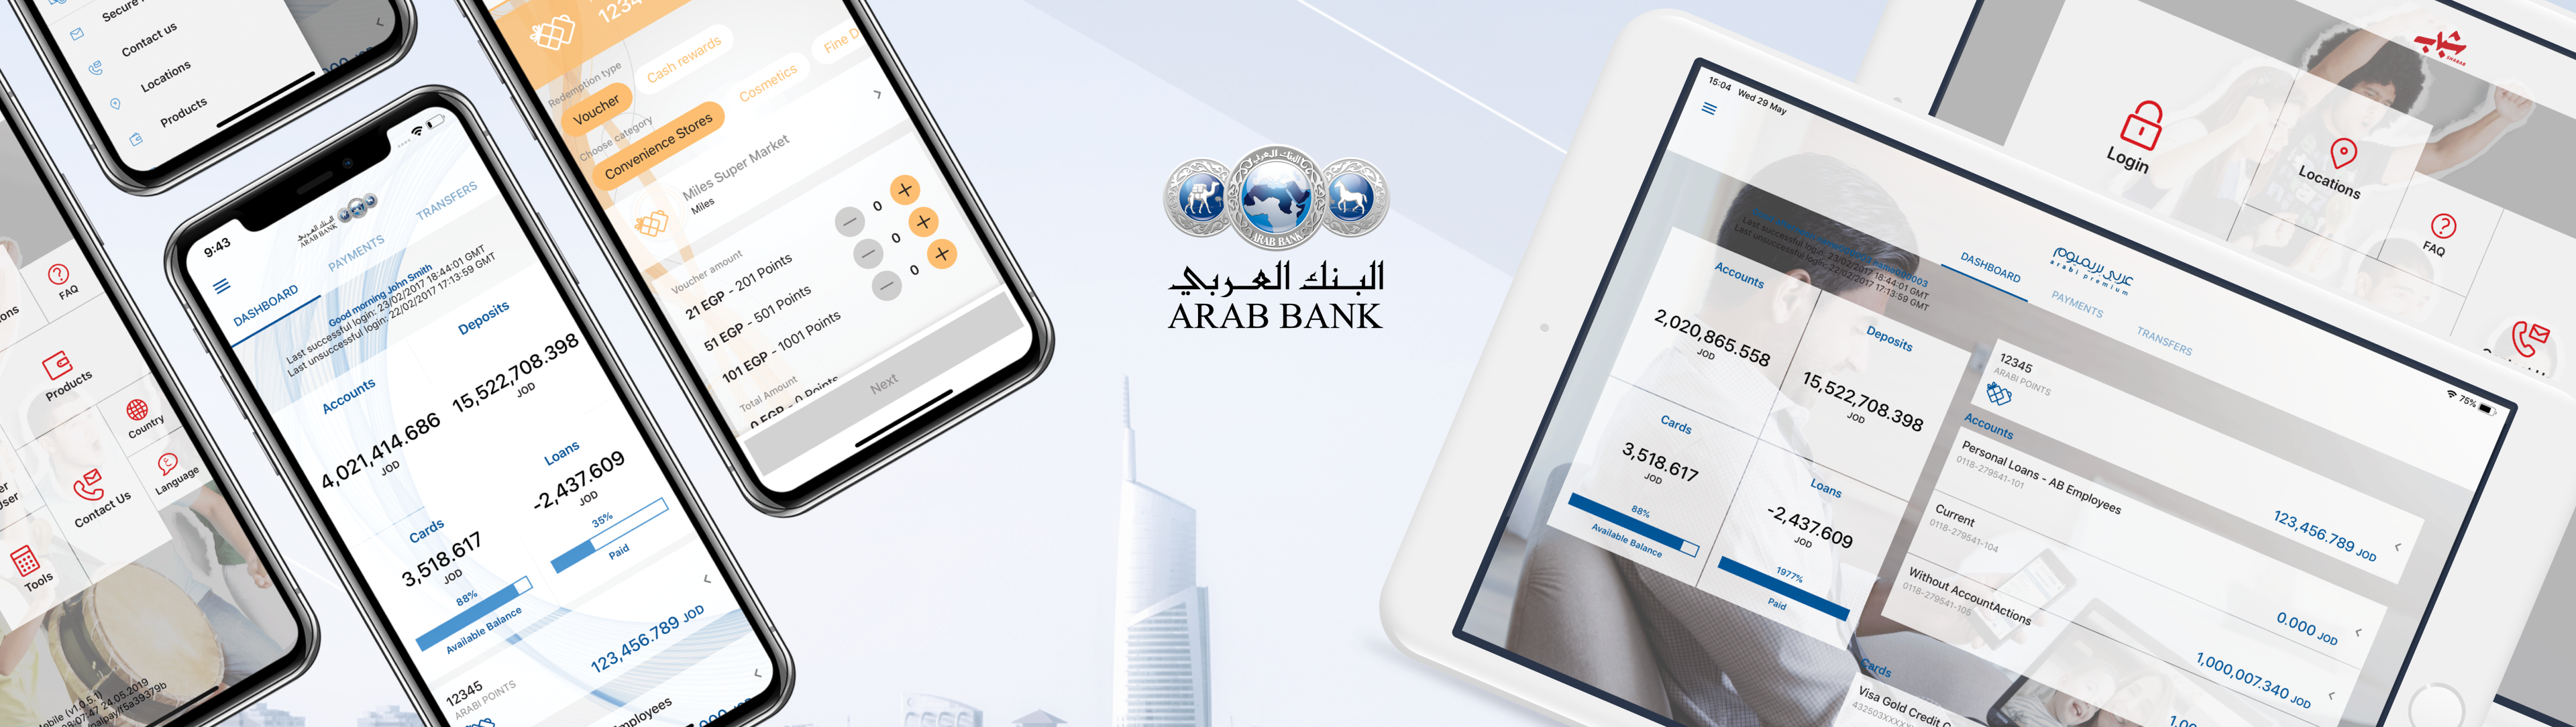 Arab Bank mobile banking app illustration